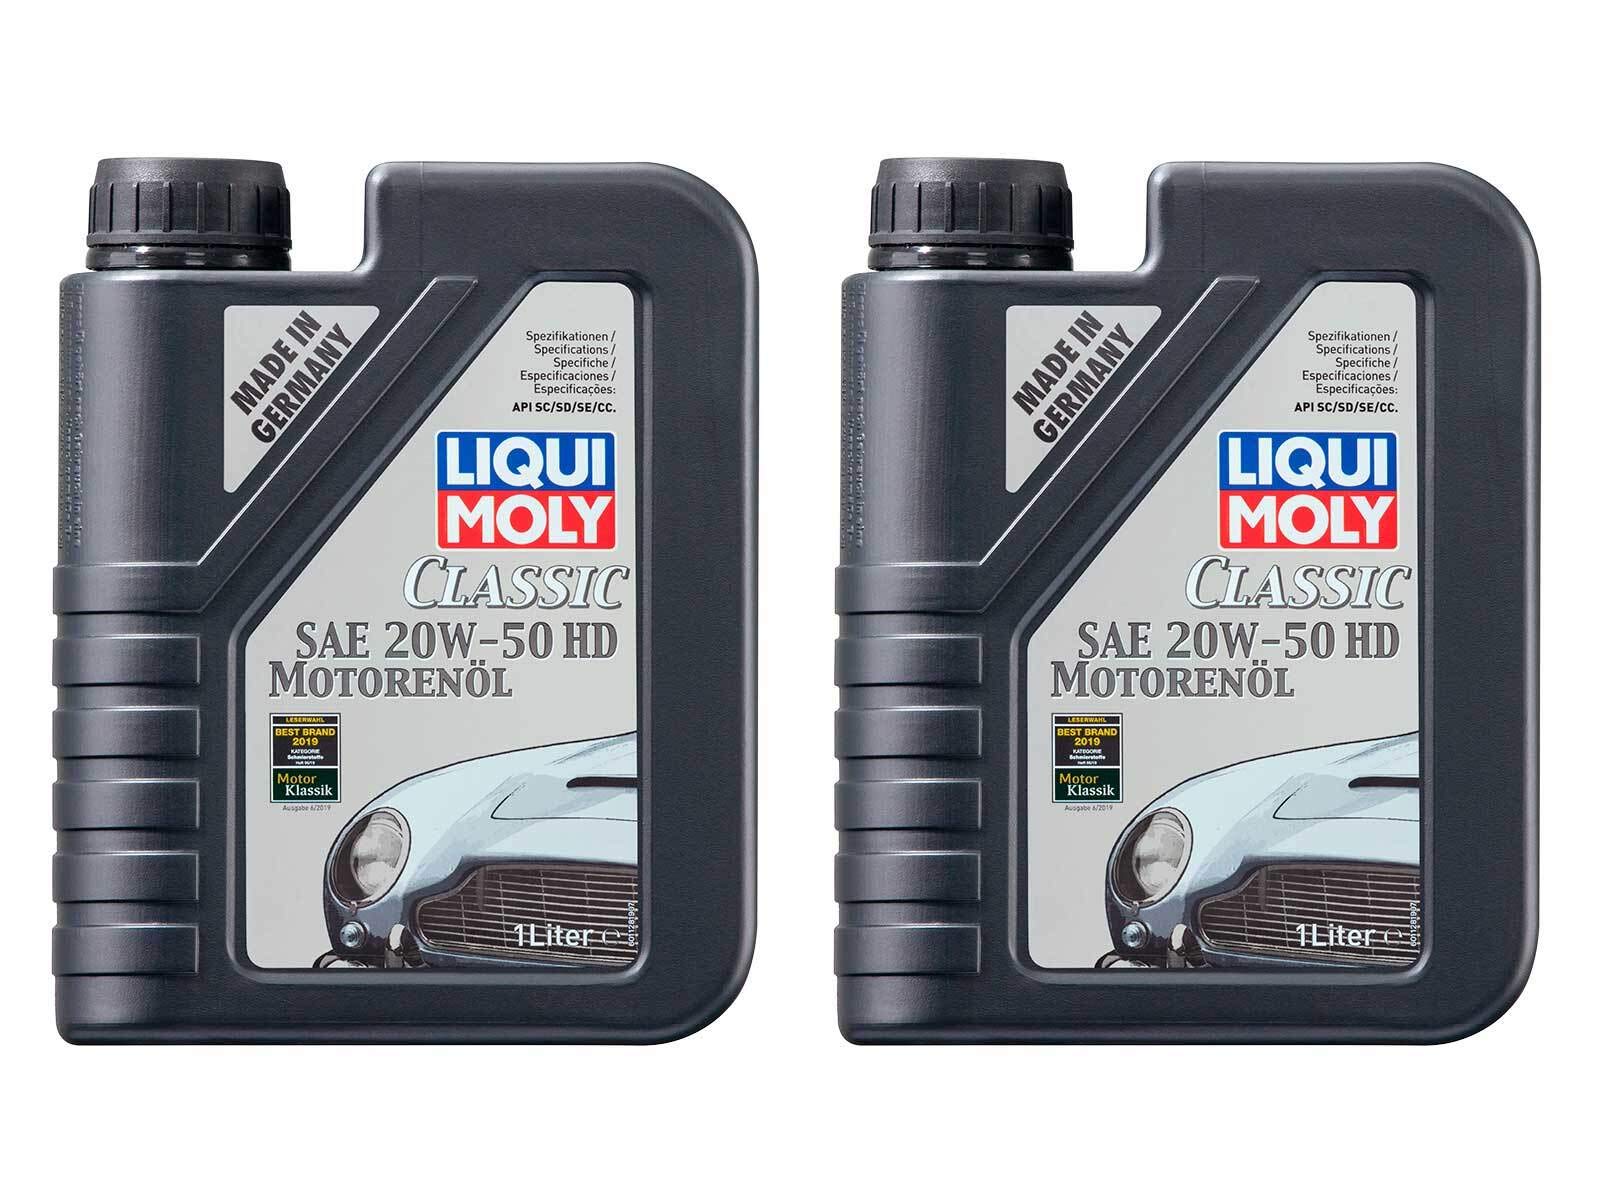 ILODA 2X Original Liqui Moly 1L Classic Motorenöl Motoröl Motoroil Oil SAE 20W-50 HD von ILODA